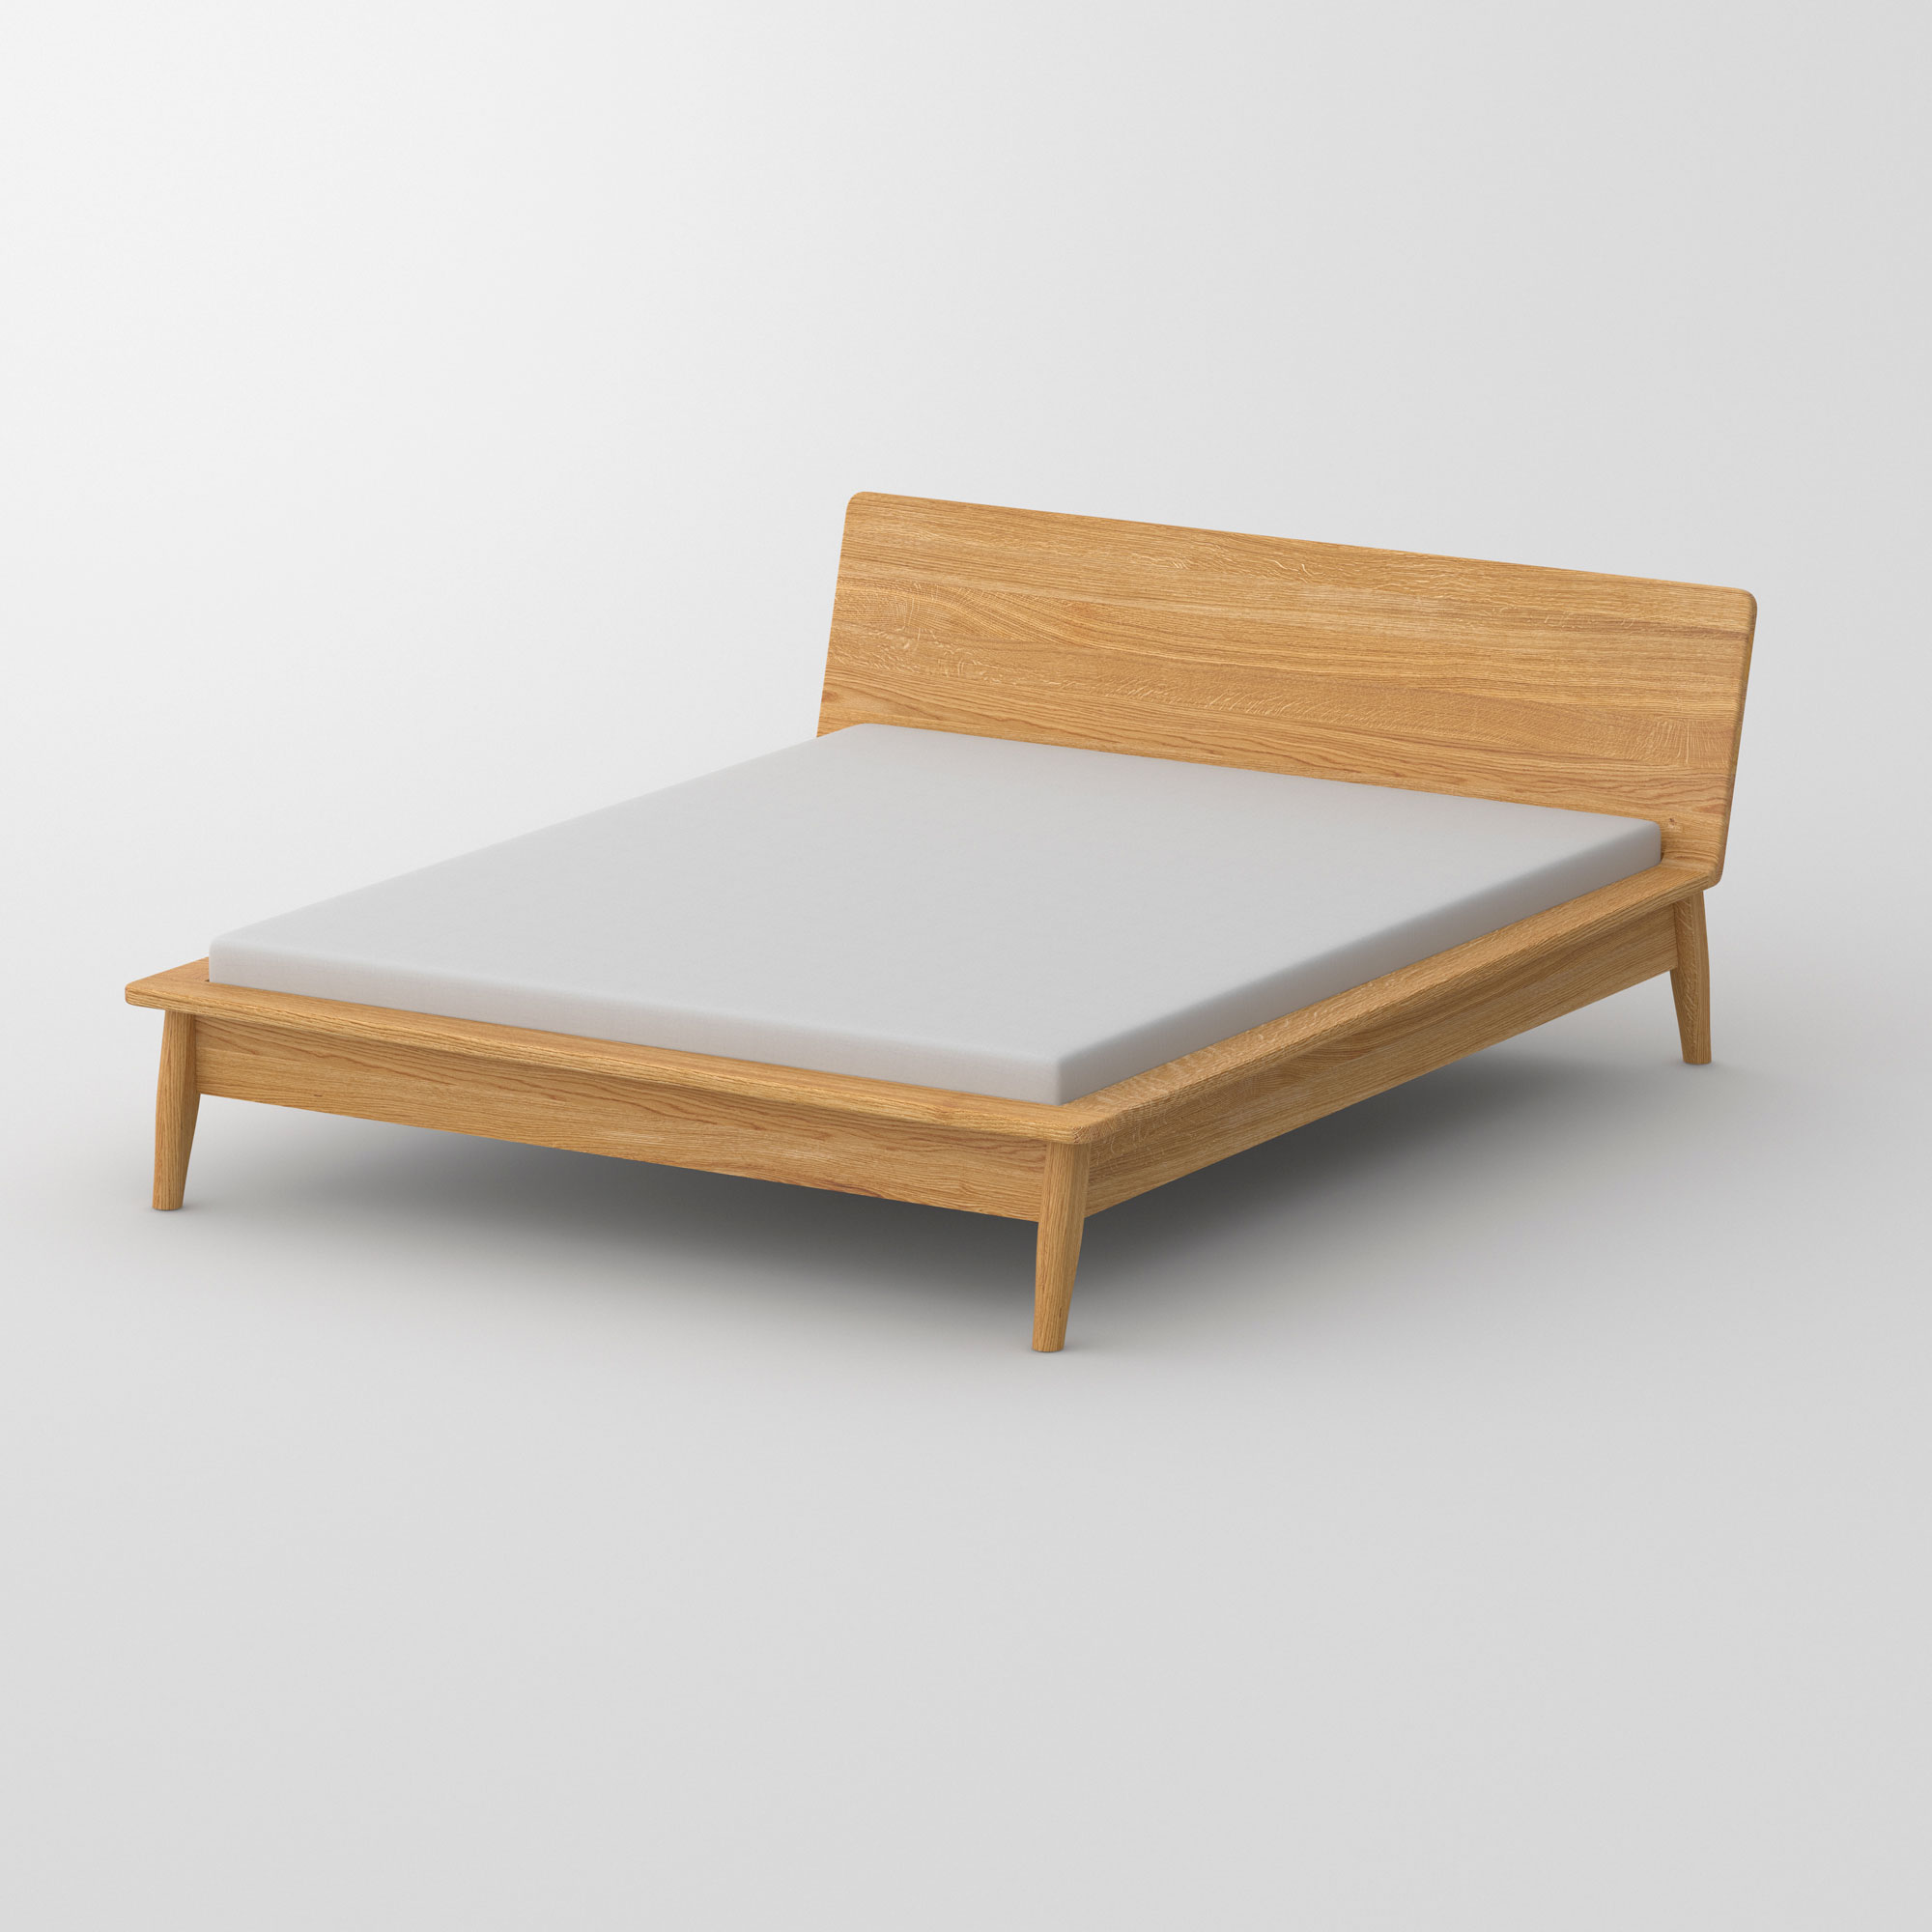 Designer Bed AETAS cam3 custom made in solid wood by vitamin design